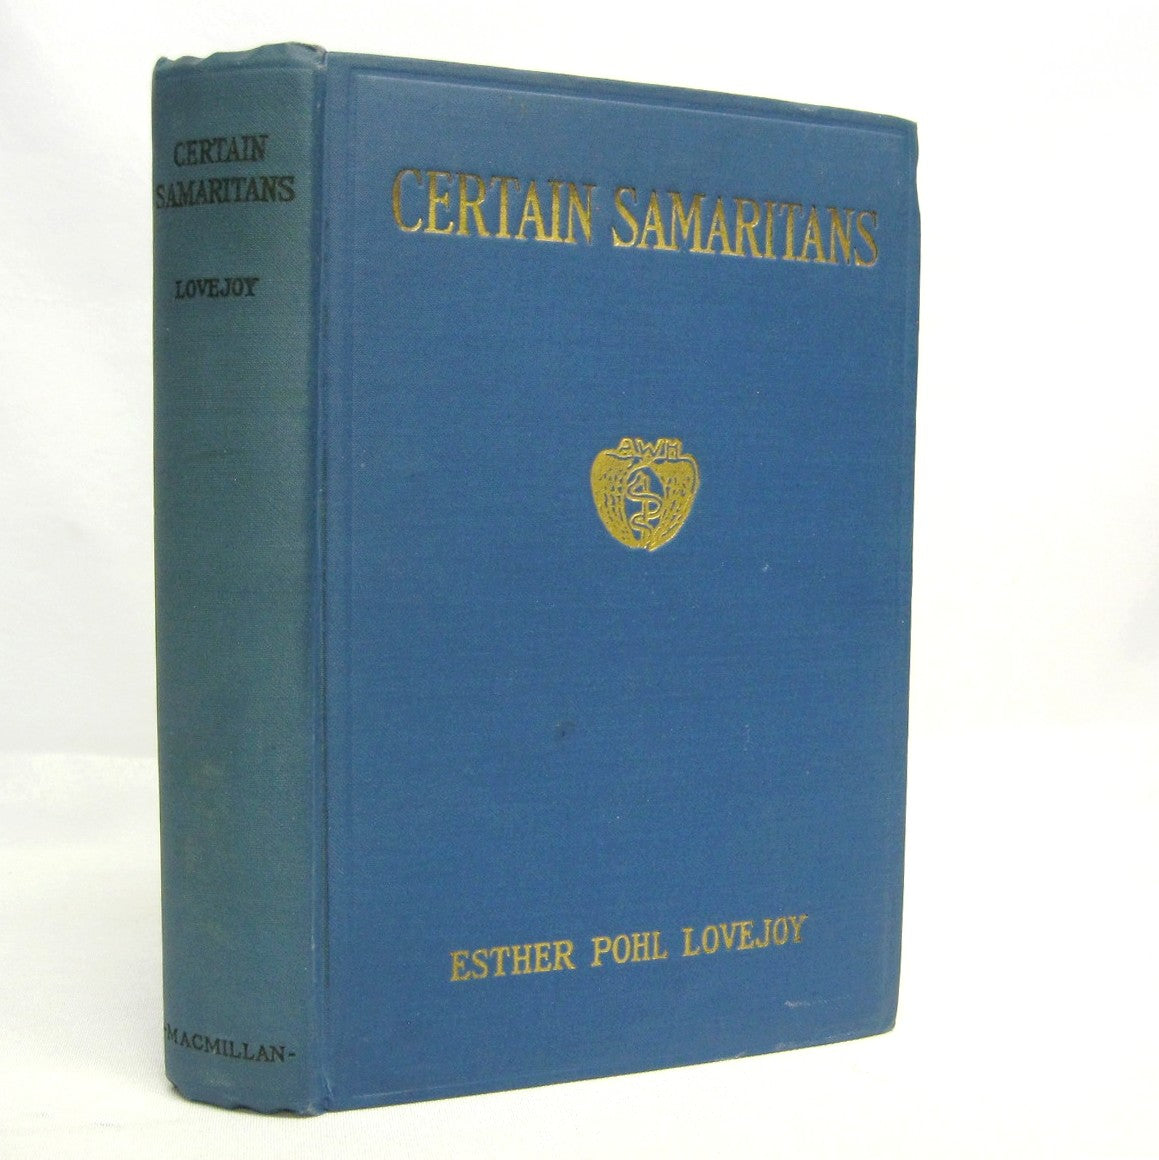 Certain Samaritans by Esther Pohl Lovejoy